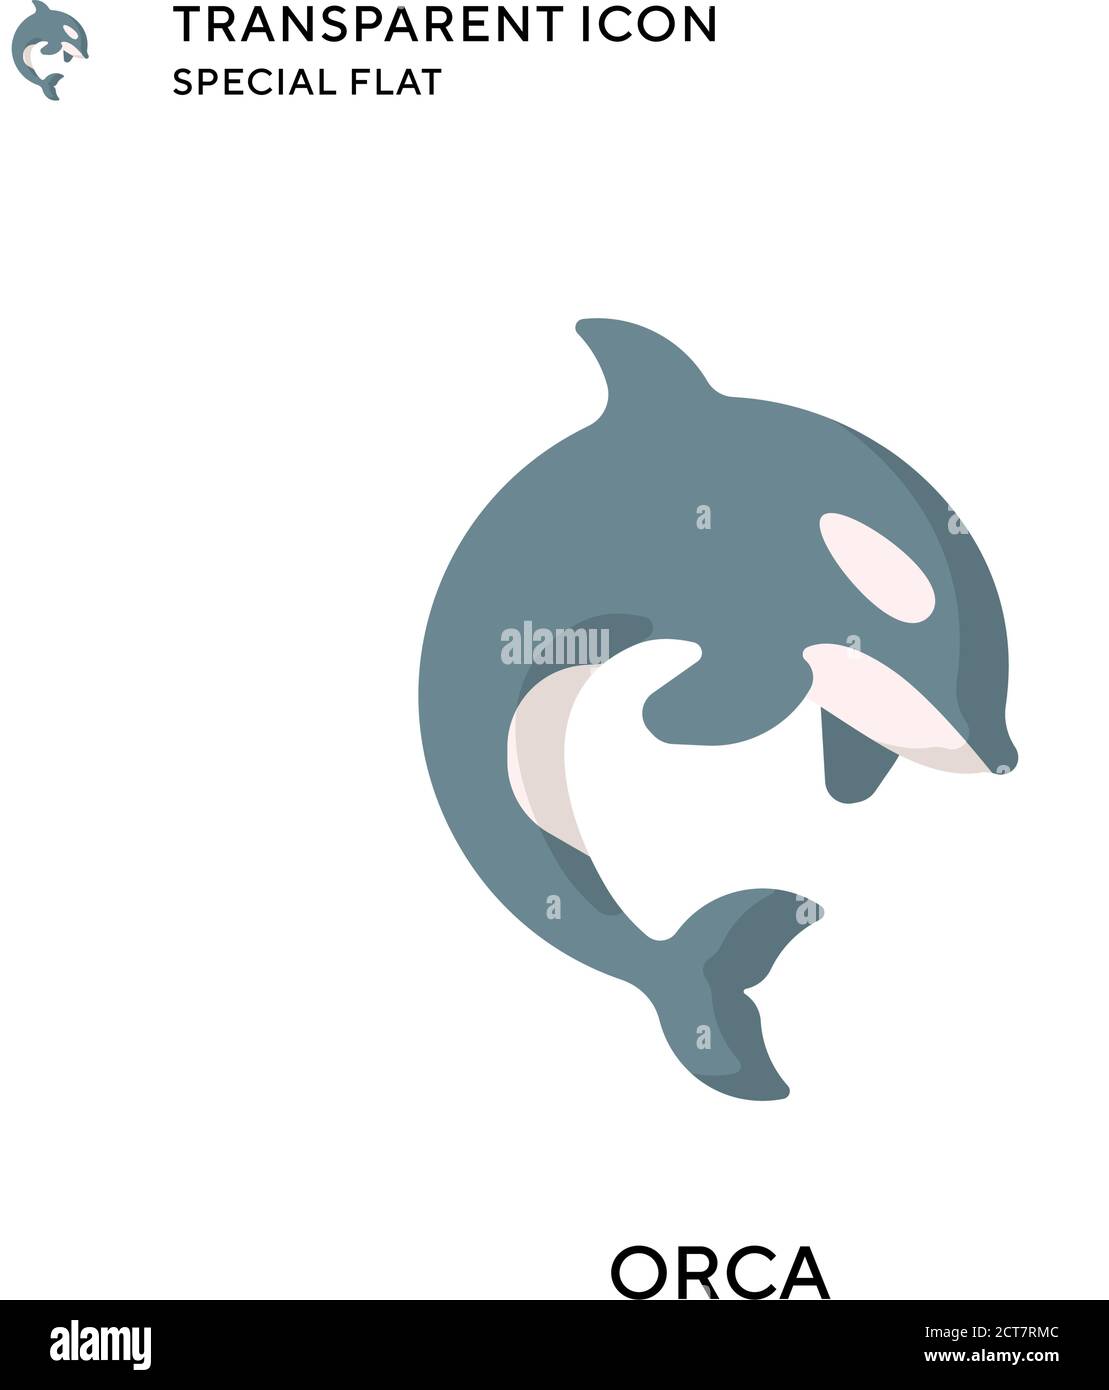 Orca vector icon. Flat style illustration. EPS 10 vector. Stock Vector